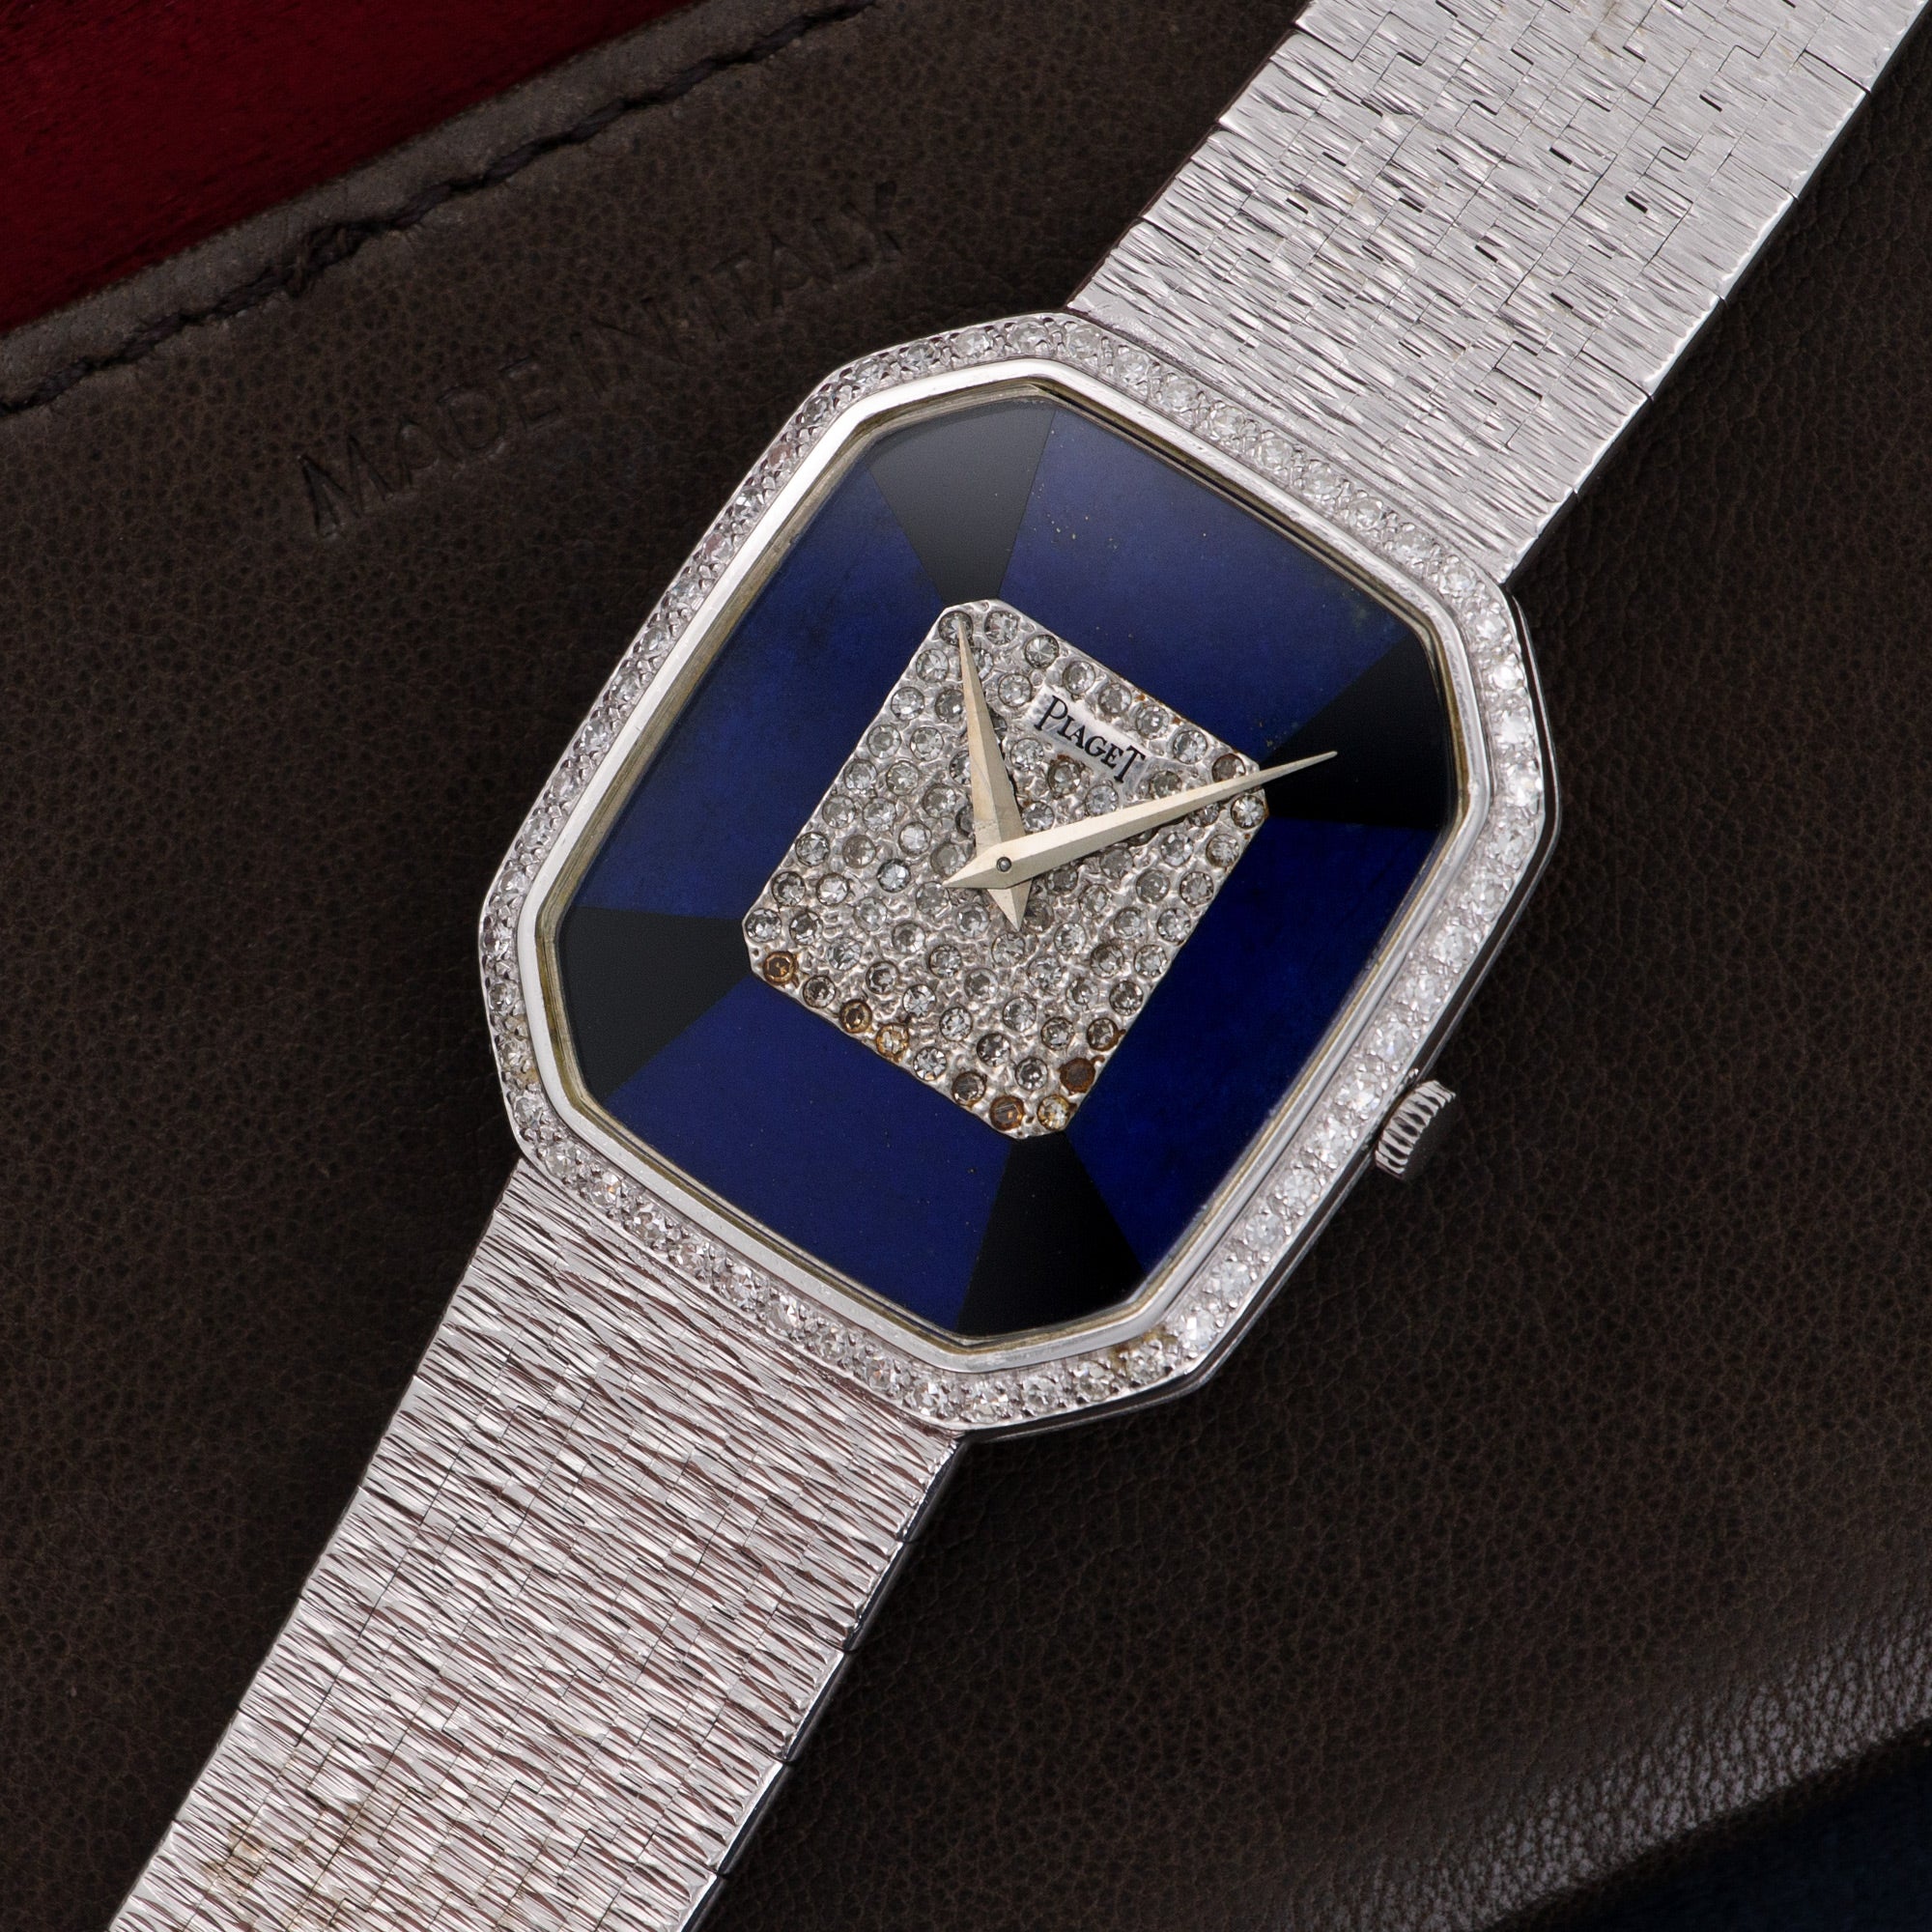 Piaget - Piaget White Gold Diamond Lapis Onyx Watch - The Keystone Watches